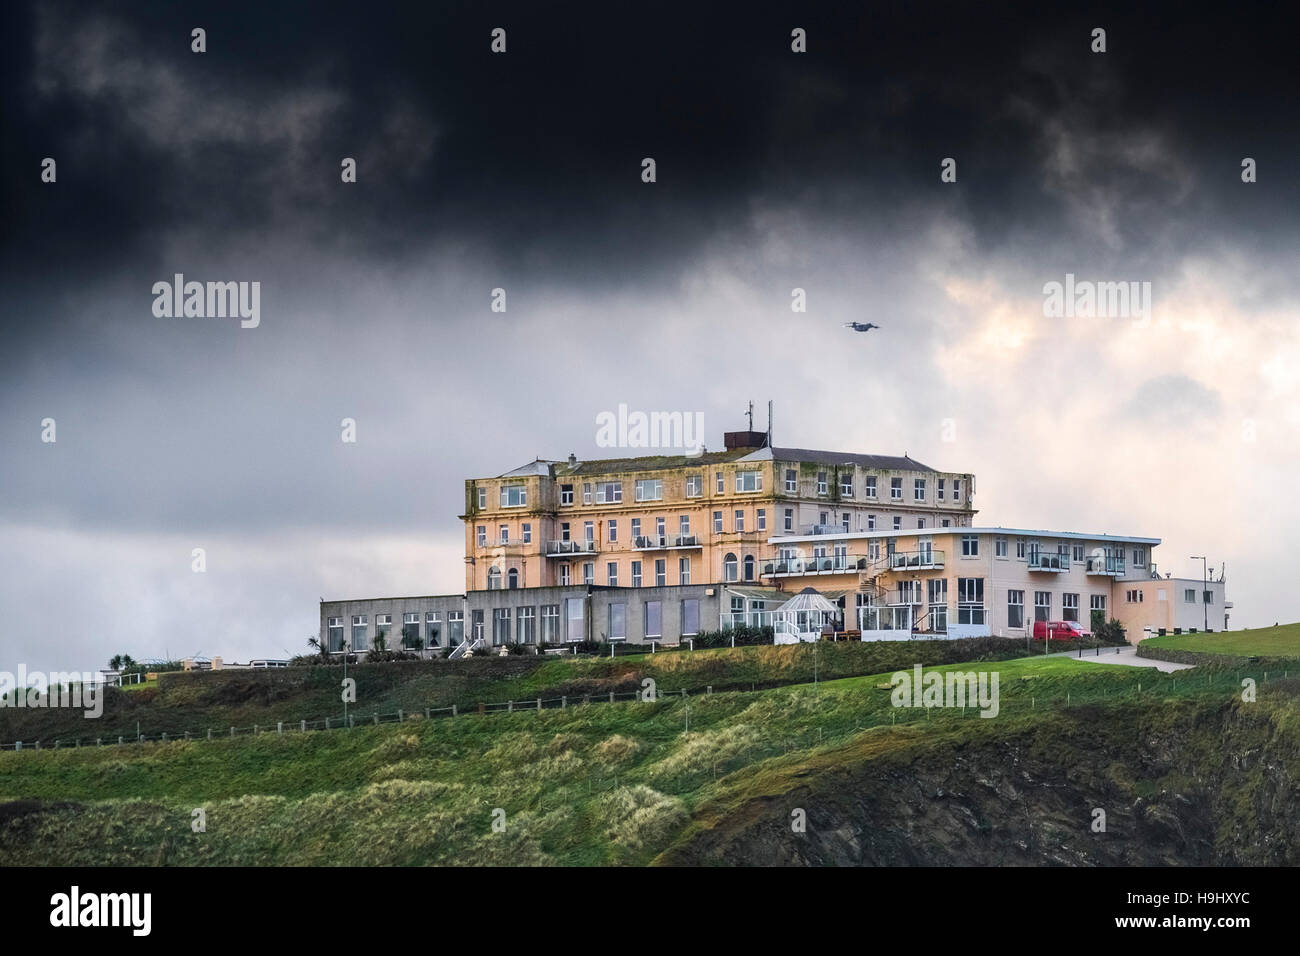 Dunkle Wolken aus Sturm Angus Versammlung über The Atlantic Hotel in Newquay, Cornwall. UK-Wetter. Stockfoto